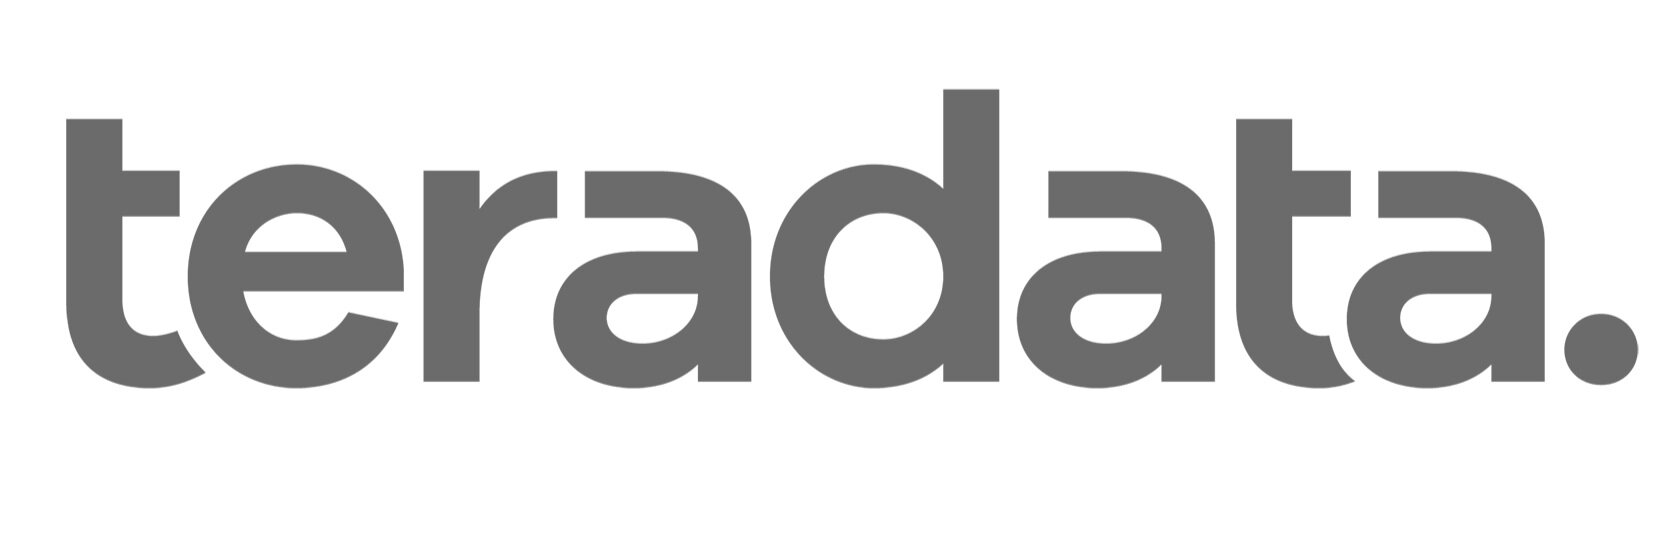 Teradata_logo_2018.jpg